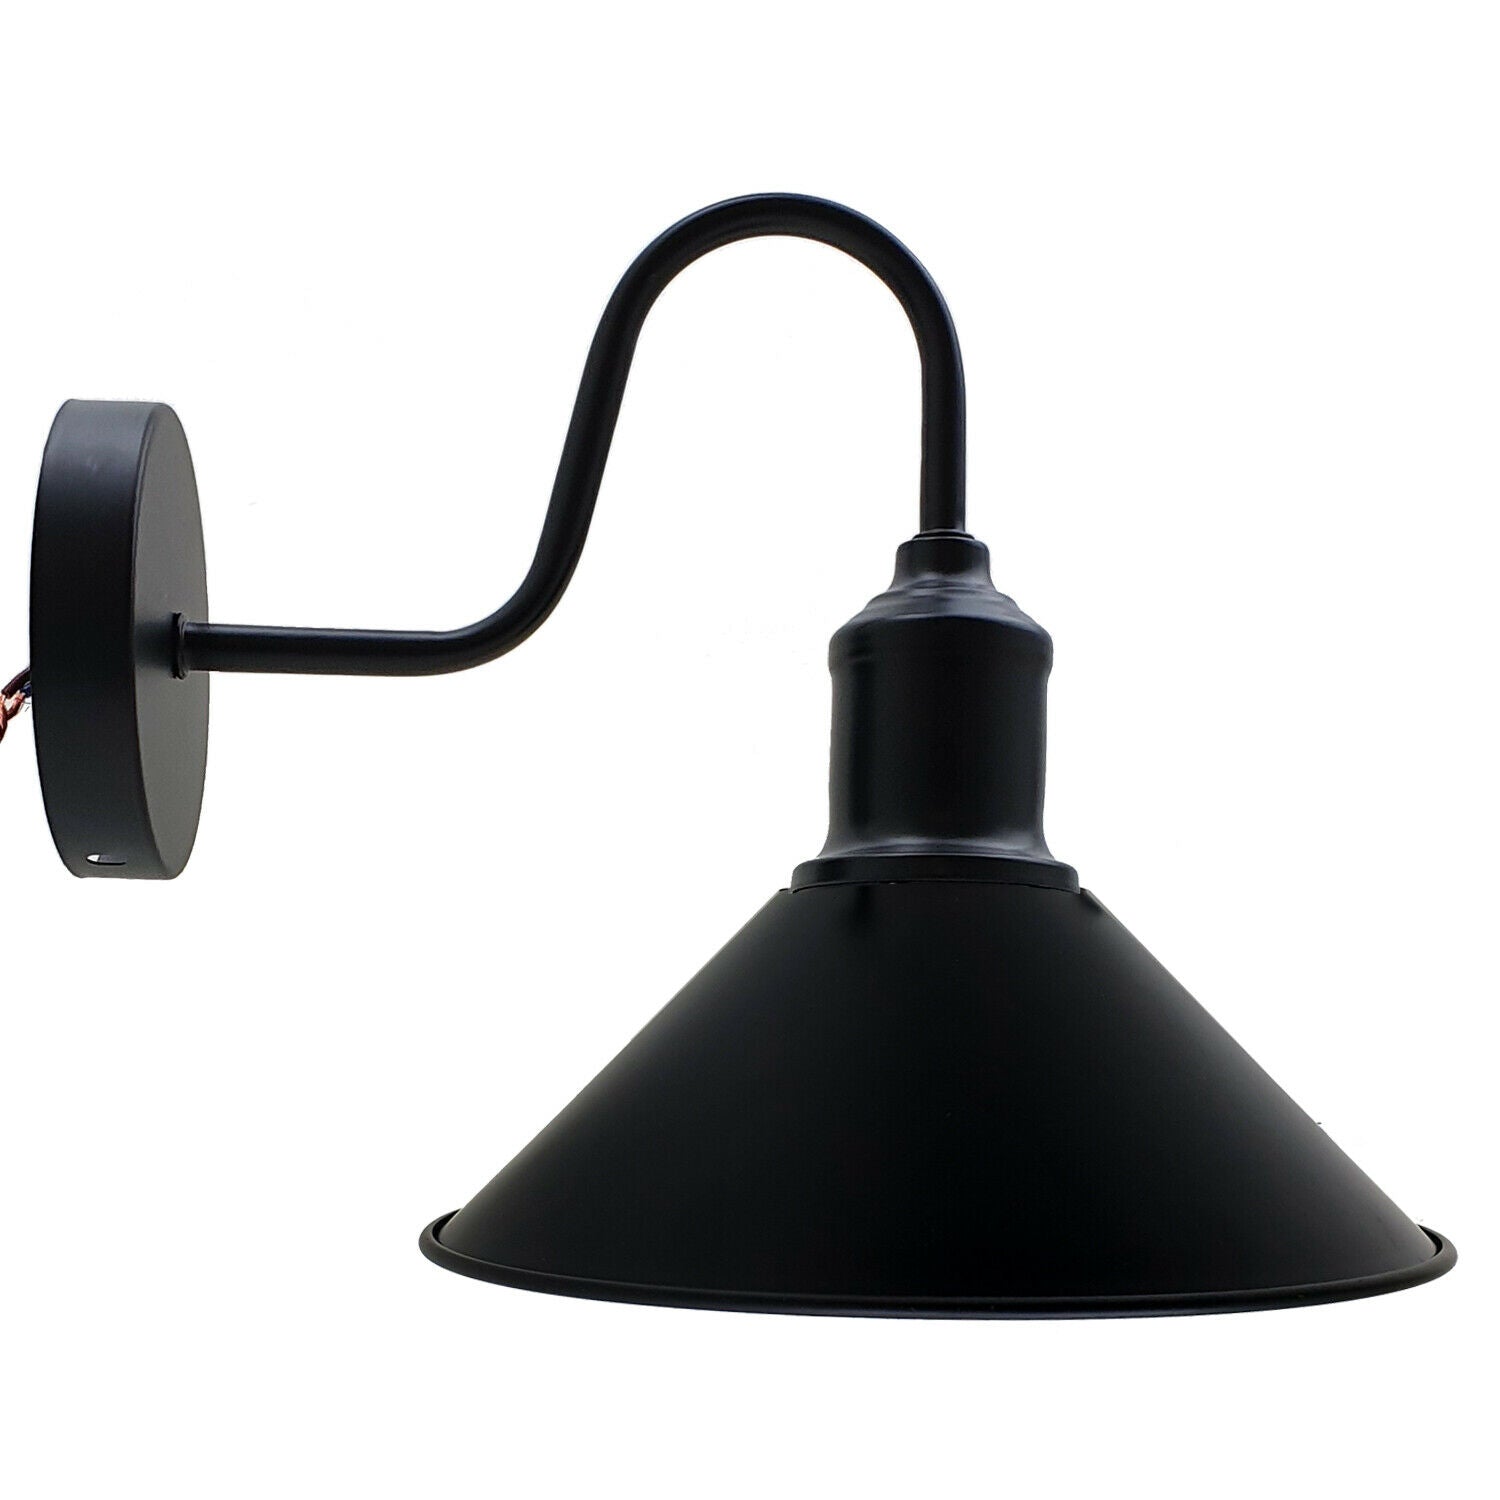 Modern Retro Industrial Black Color Wall Mounted Lights Rustic Sconce Lamps Fixture~2484 - LEDSone UK Ltd